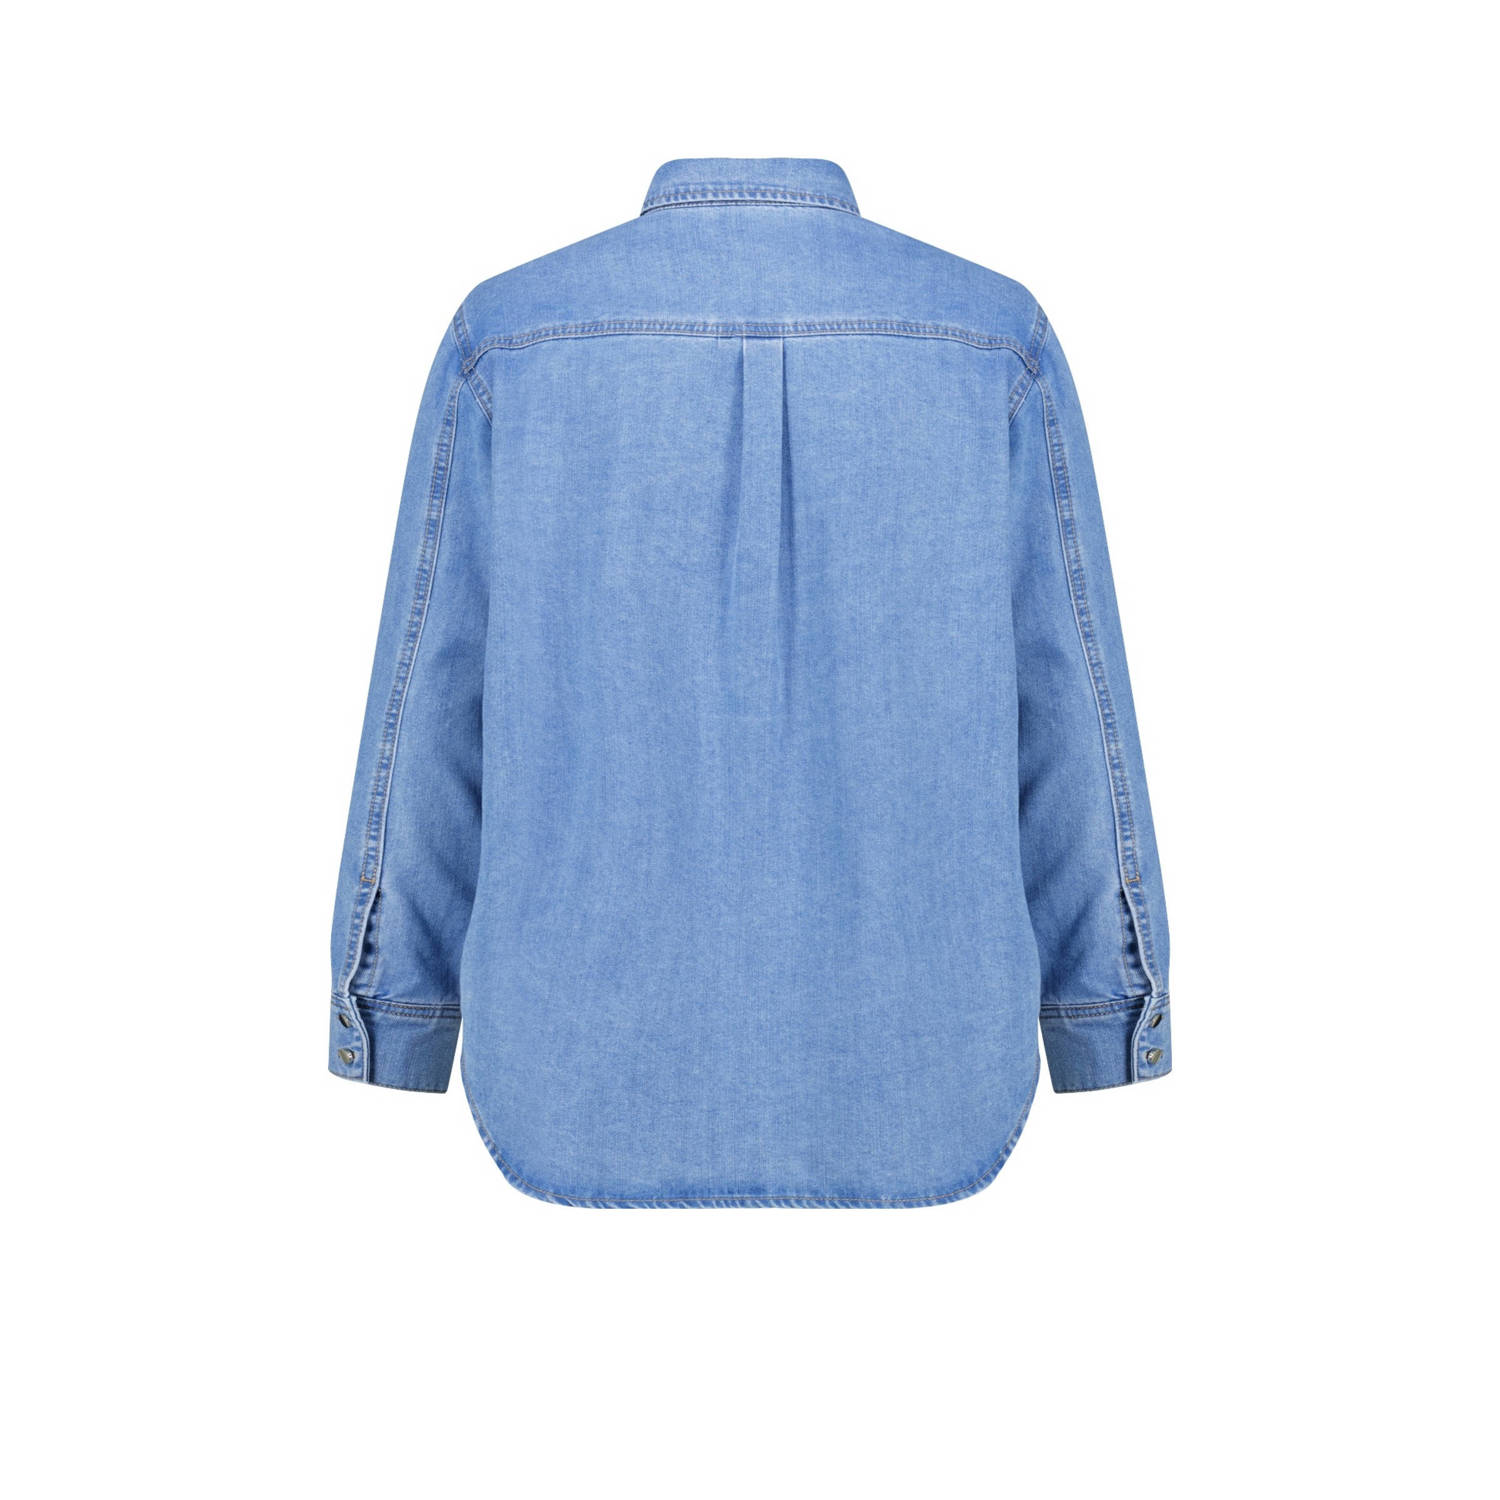 MS Mode denim blouse medium blue denim